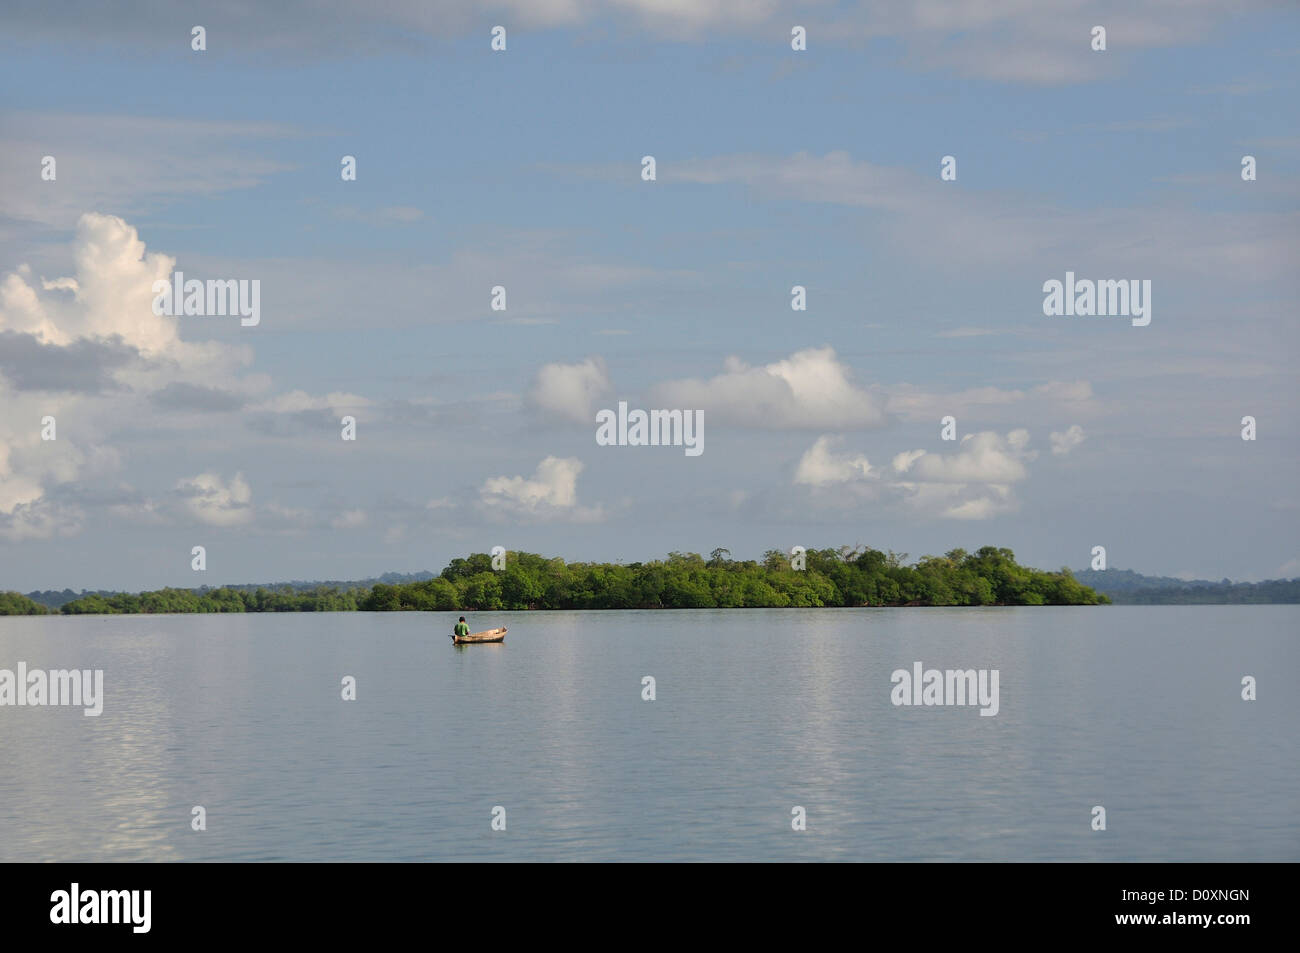 Islands, boat, mangrove, tropical, still, calm, Bahia de Almirante, Almirante, Panama, Central America, Stock Photo